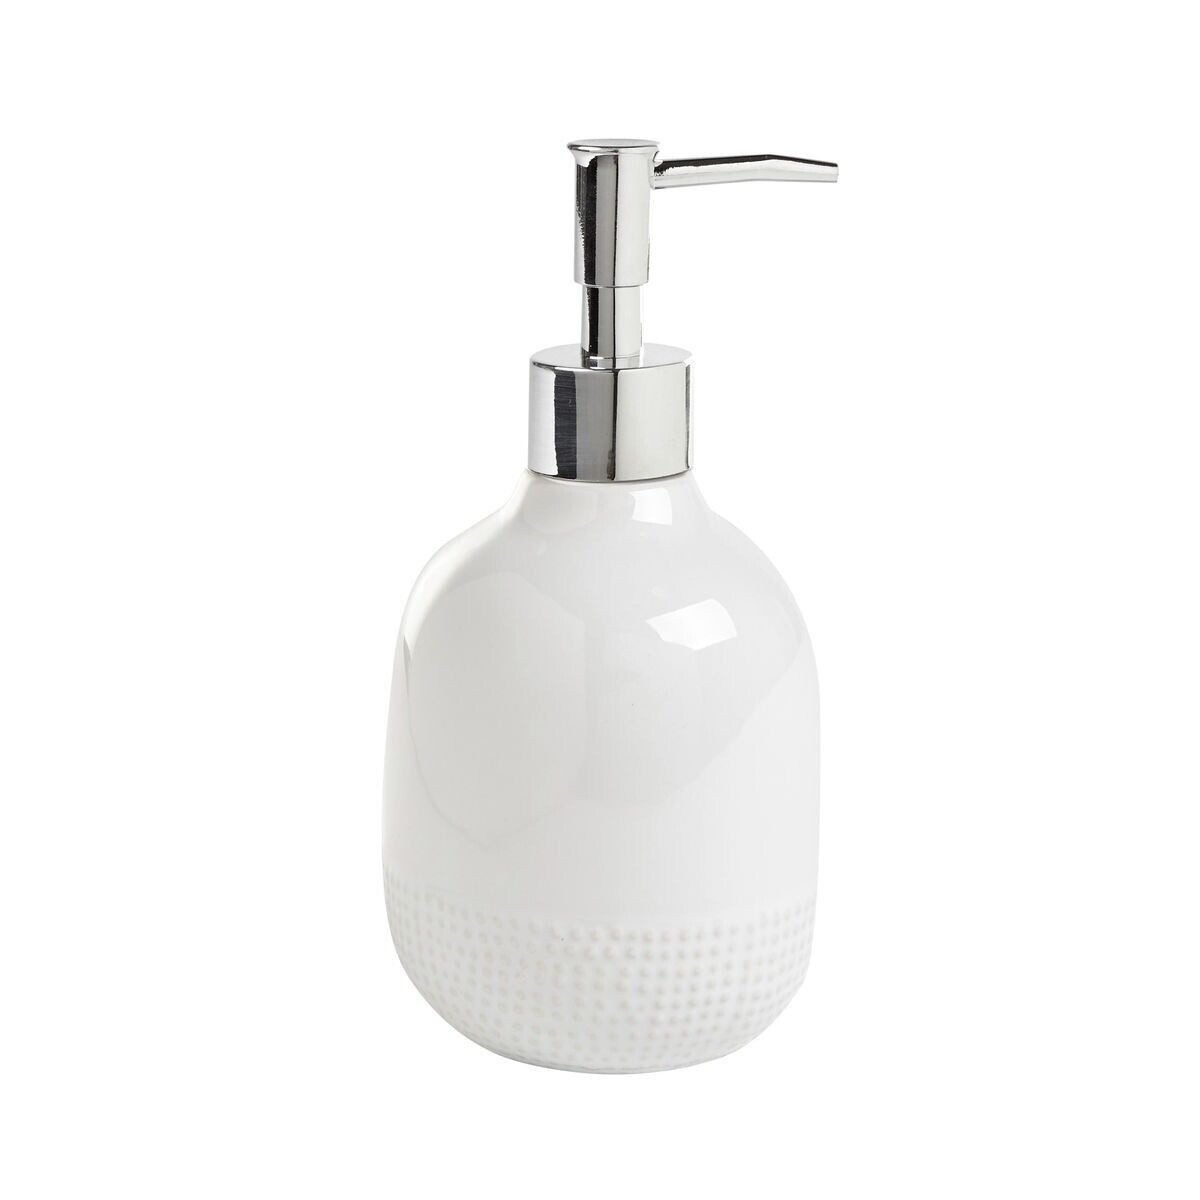 Dots ceramic soap dispenser, White, large image number 0